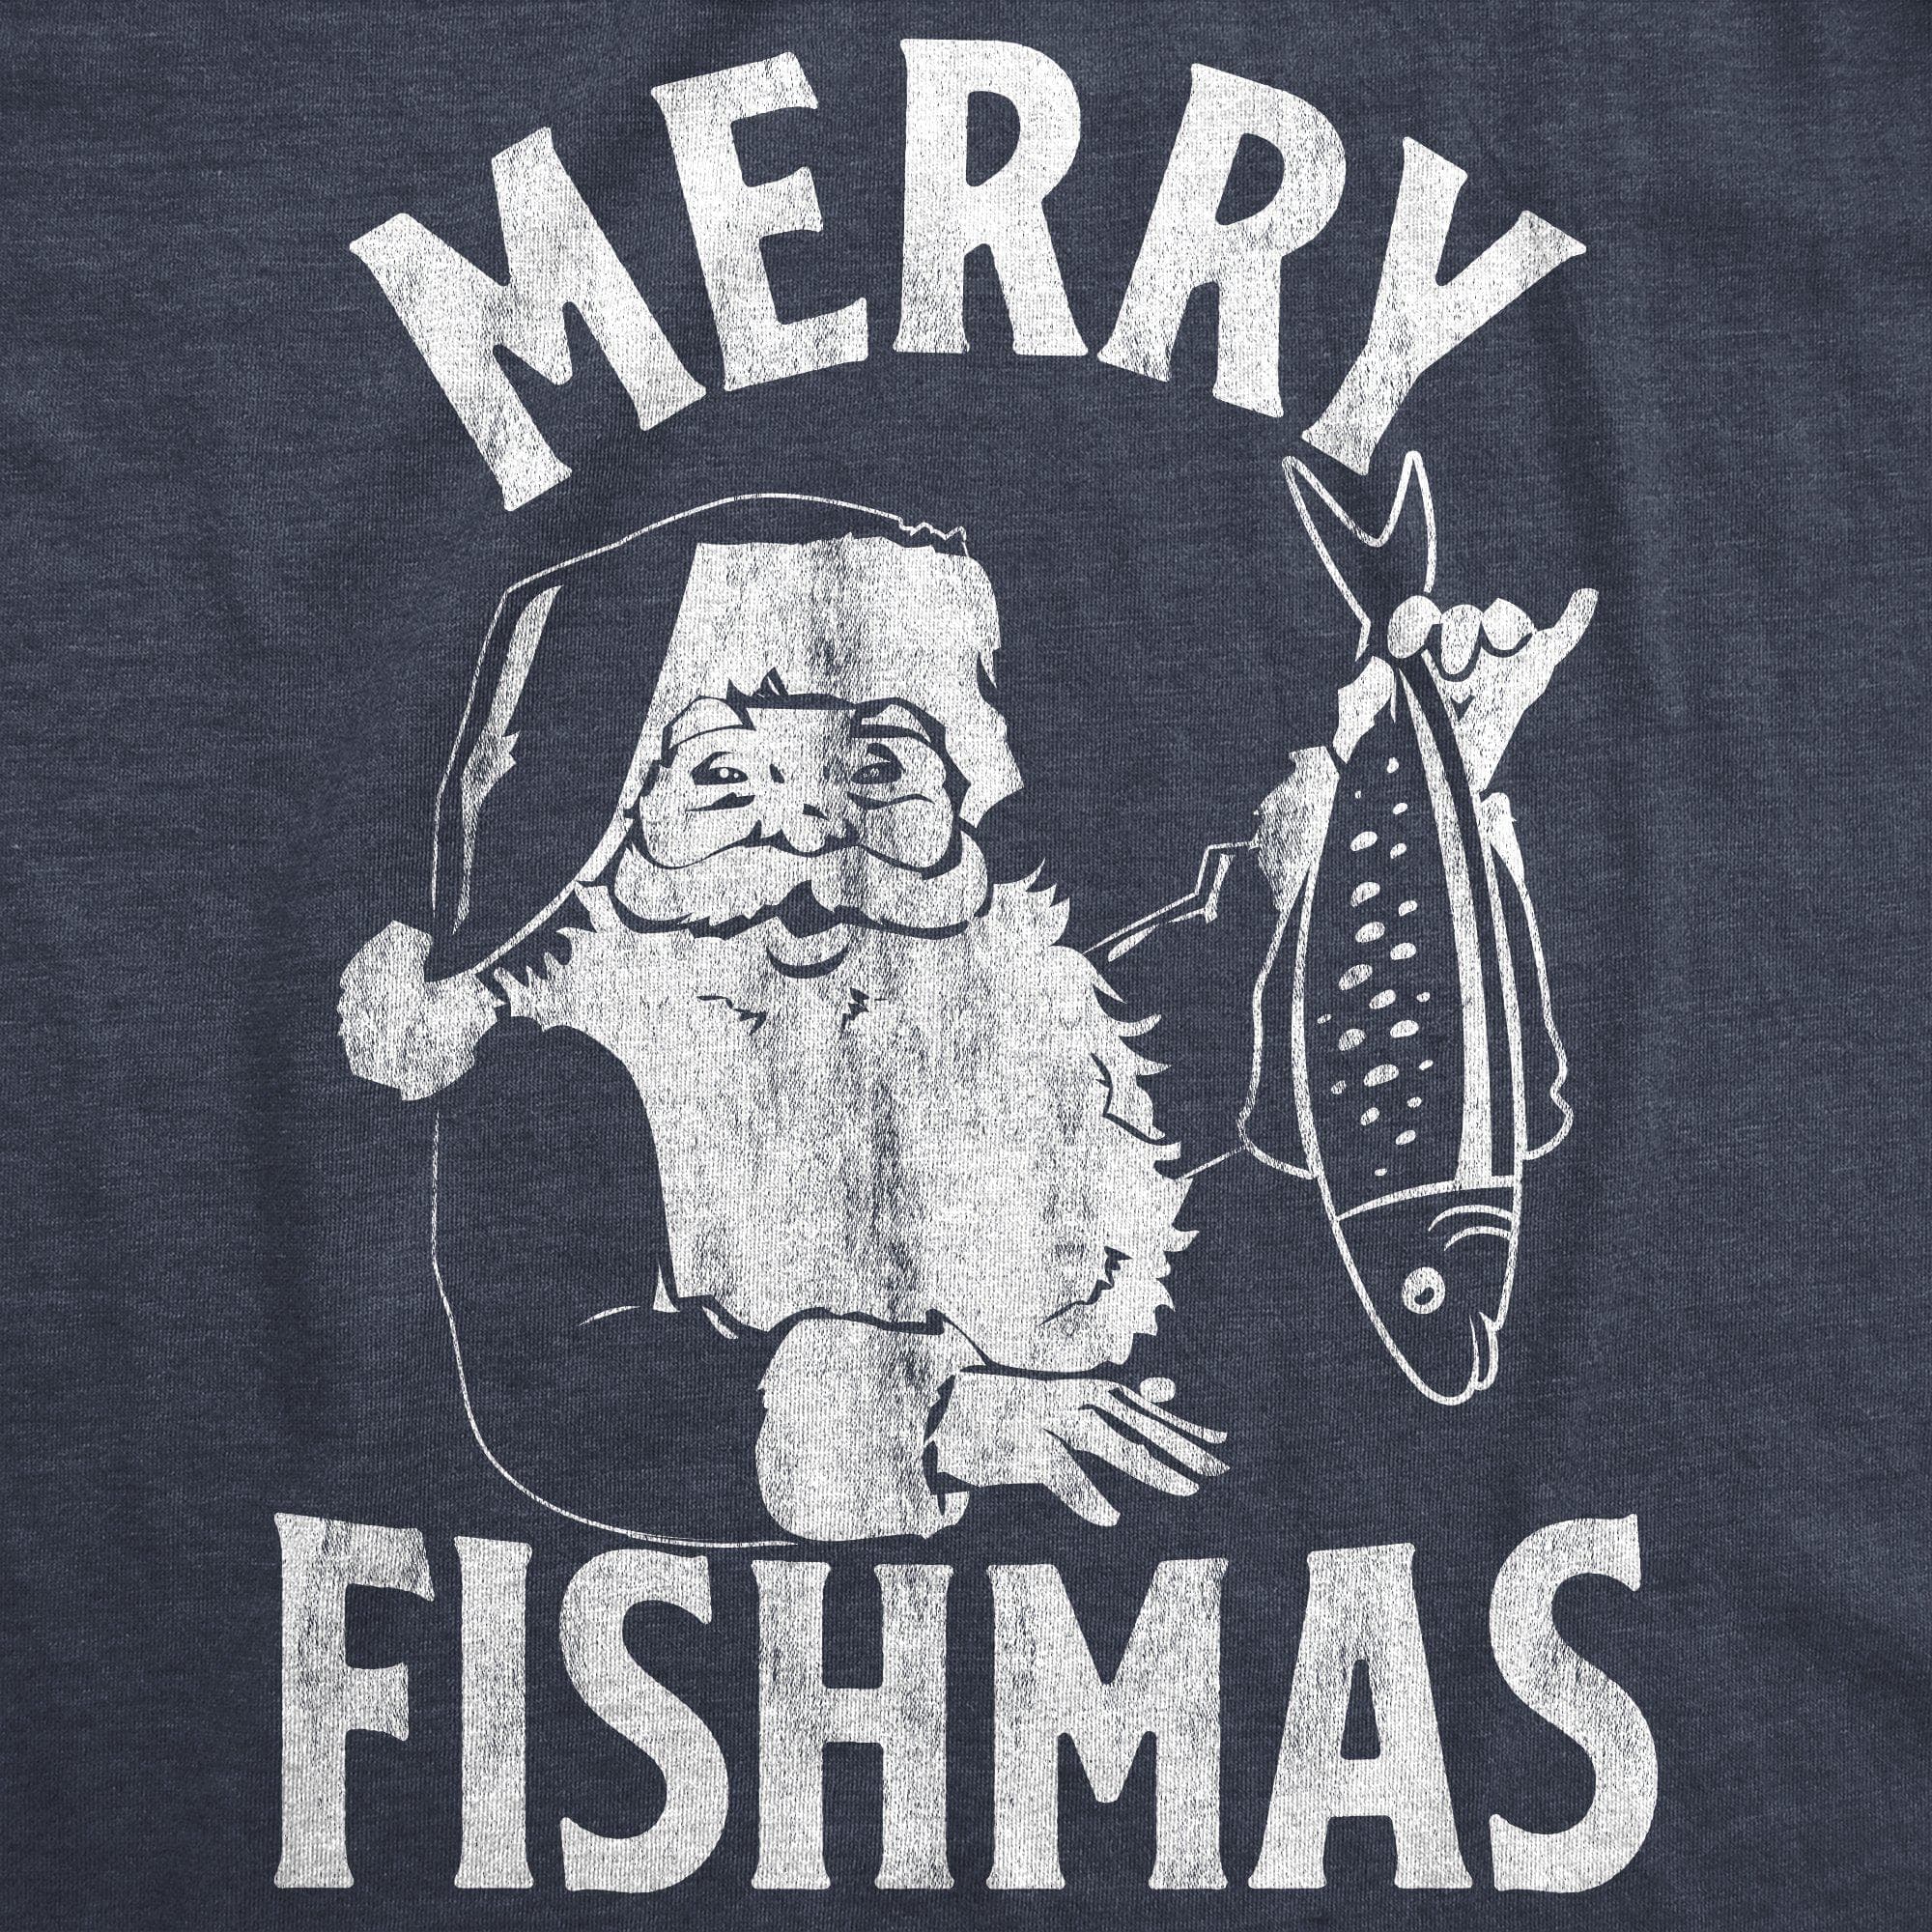 Merry Fishmas Men's Tshirt - Crazy Dog T-Shirts